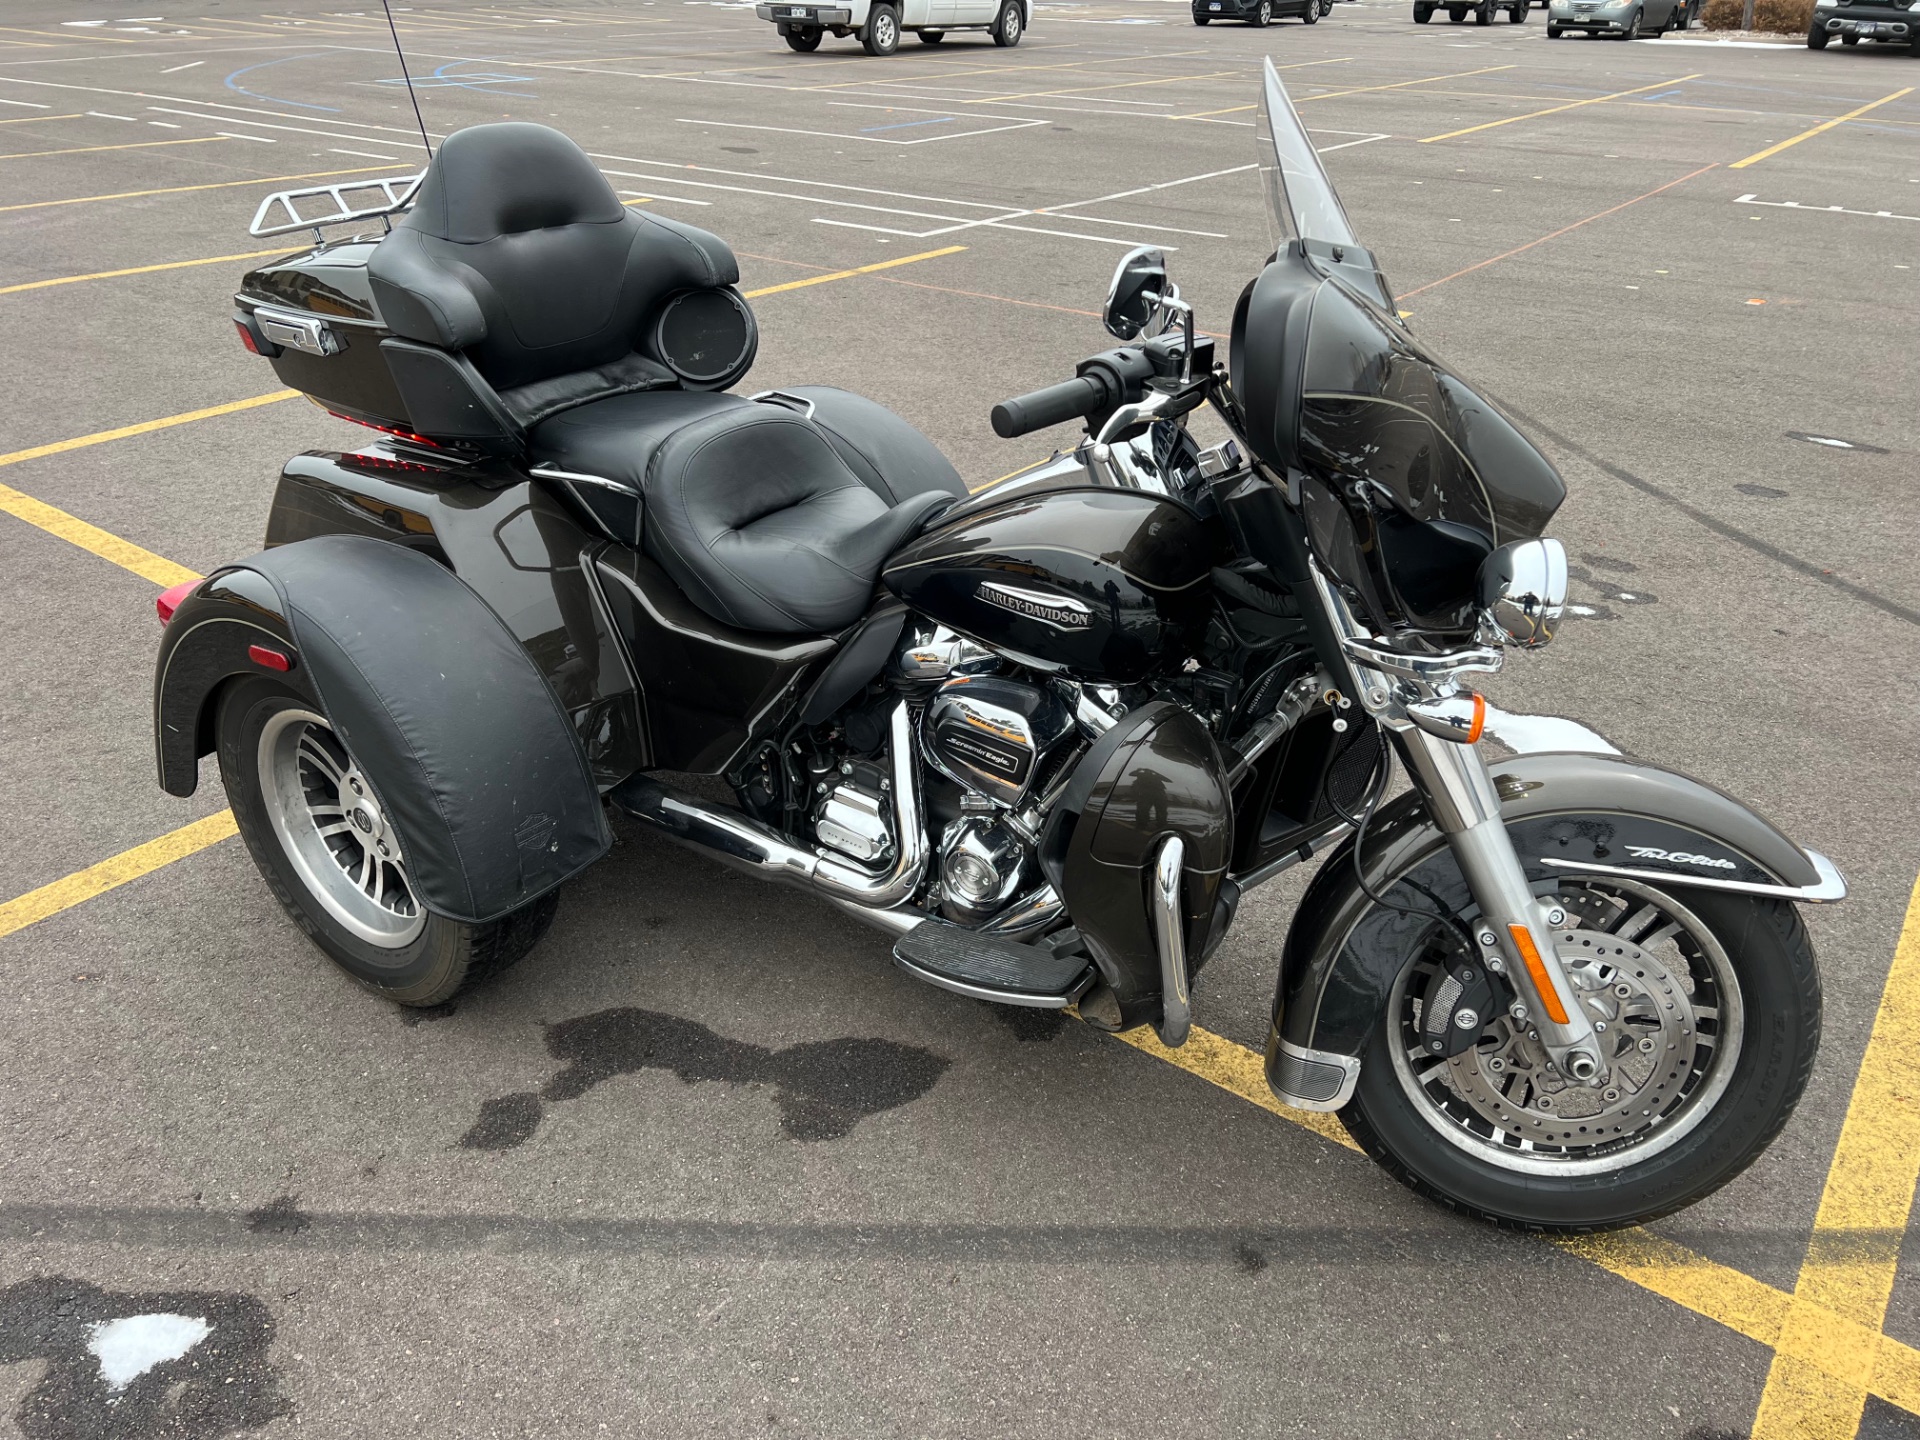 2020 Harley-Davidson Tri Glide® Ultra in Colorado Springs, Colorado - Photo 2